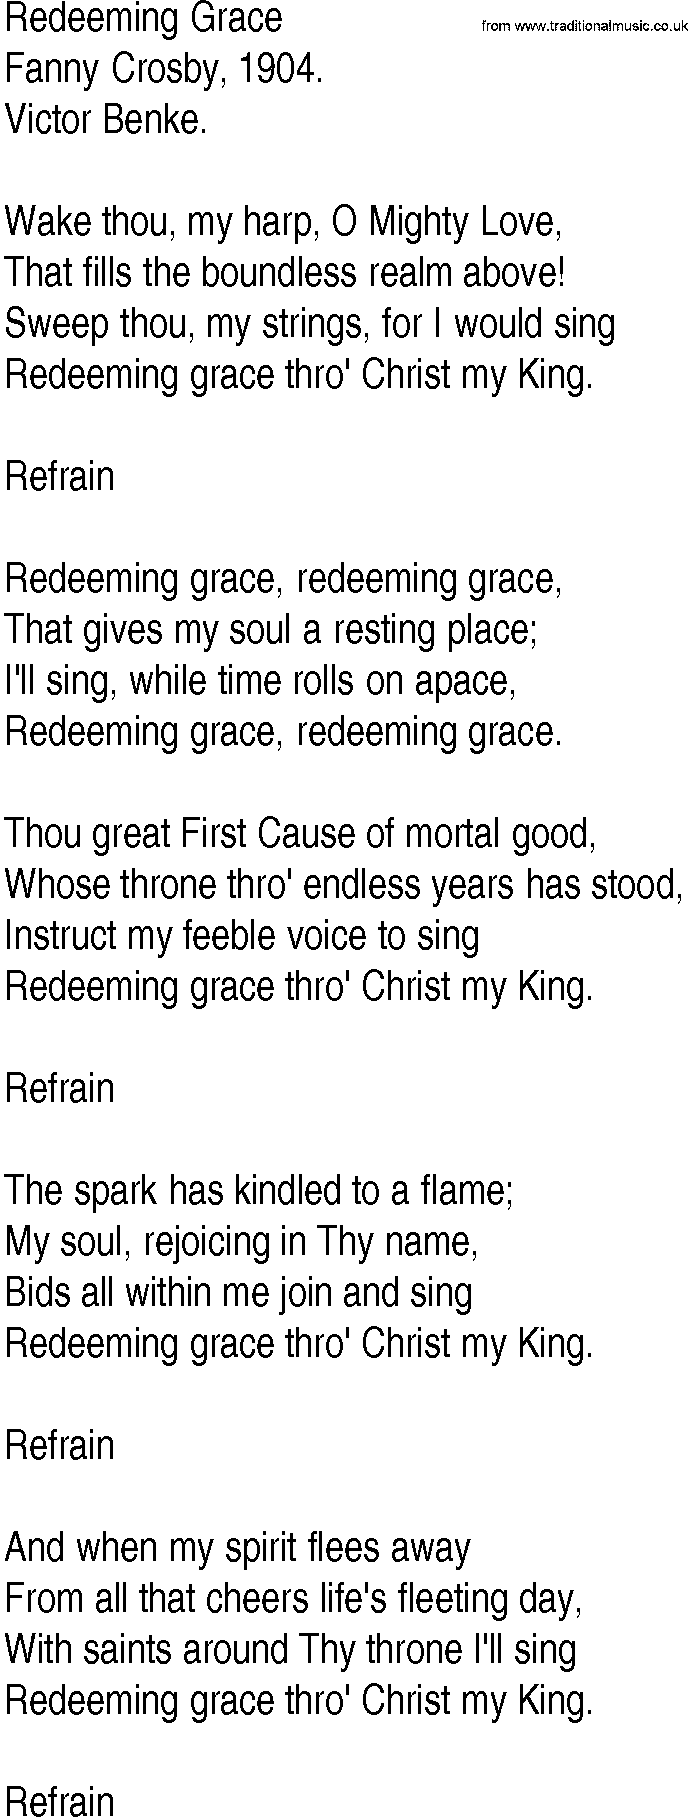 Hymn and Gospel Song: Redeeming Grace by Fanny Crosby lyrics